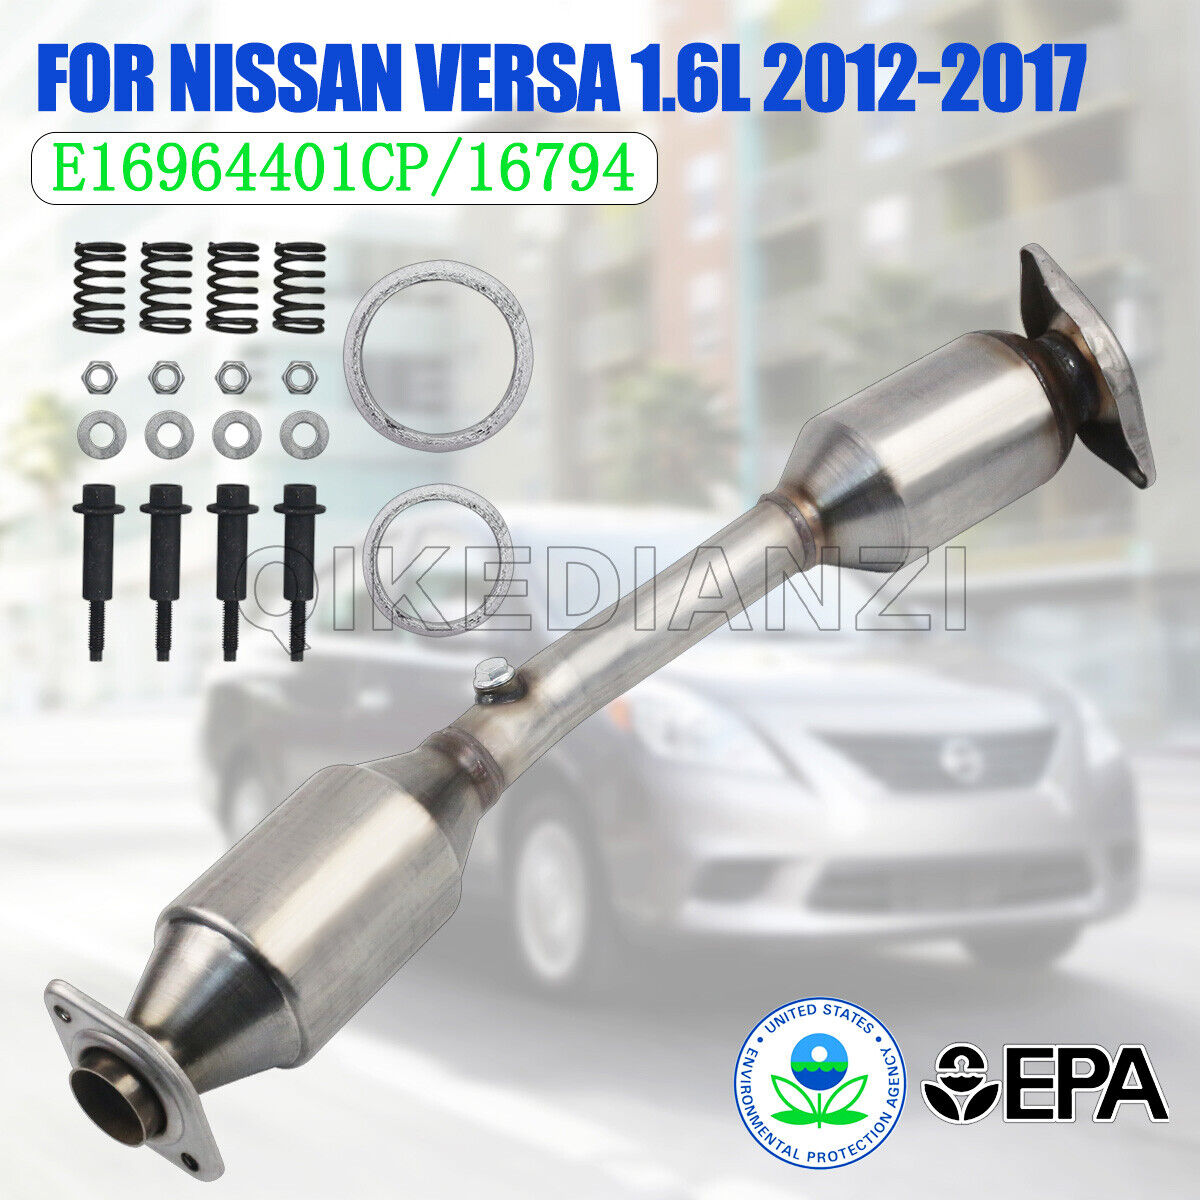 Exhaust Catalytic Converter For Nissan Versa 1.6L 2012 2013 2014 2015 2016 2017